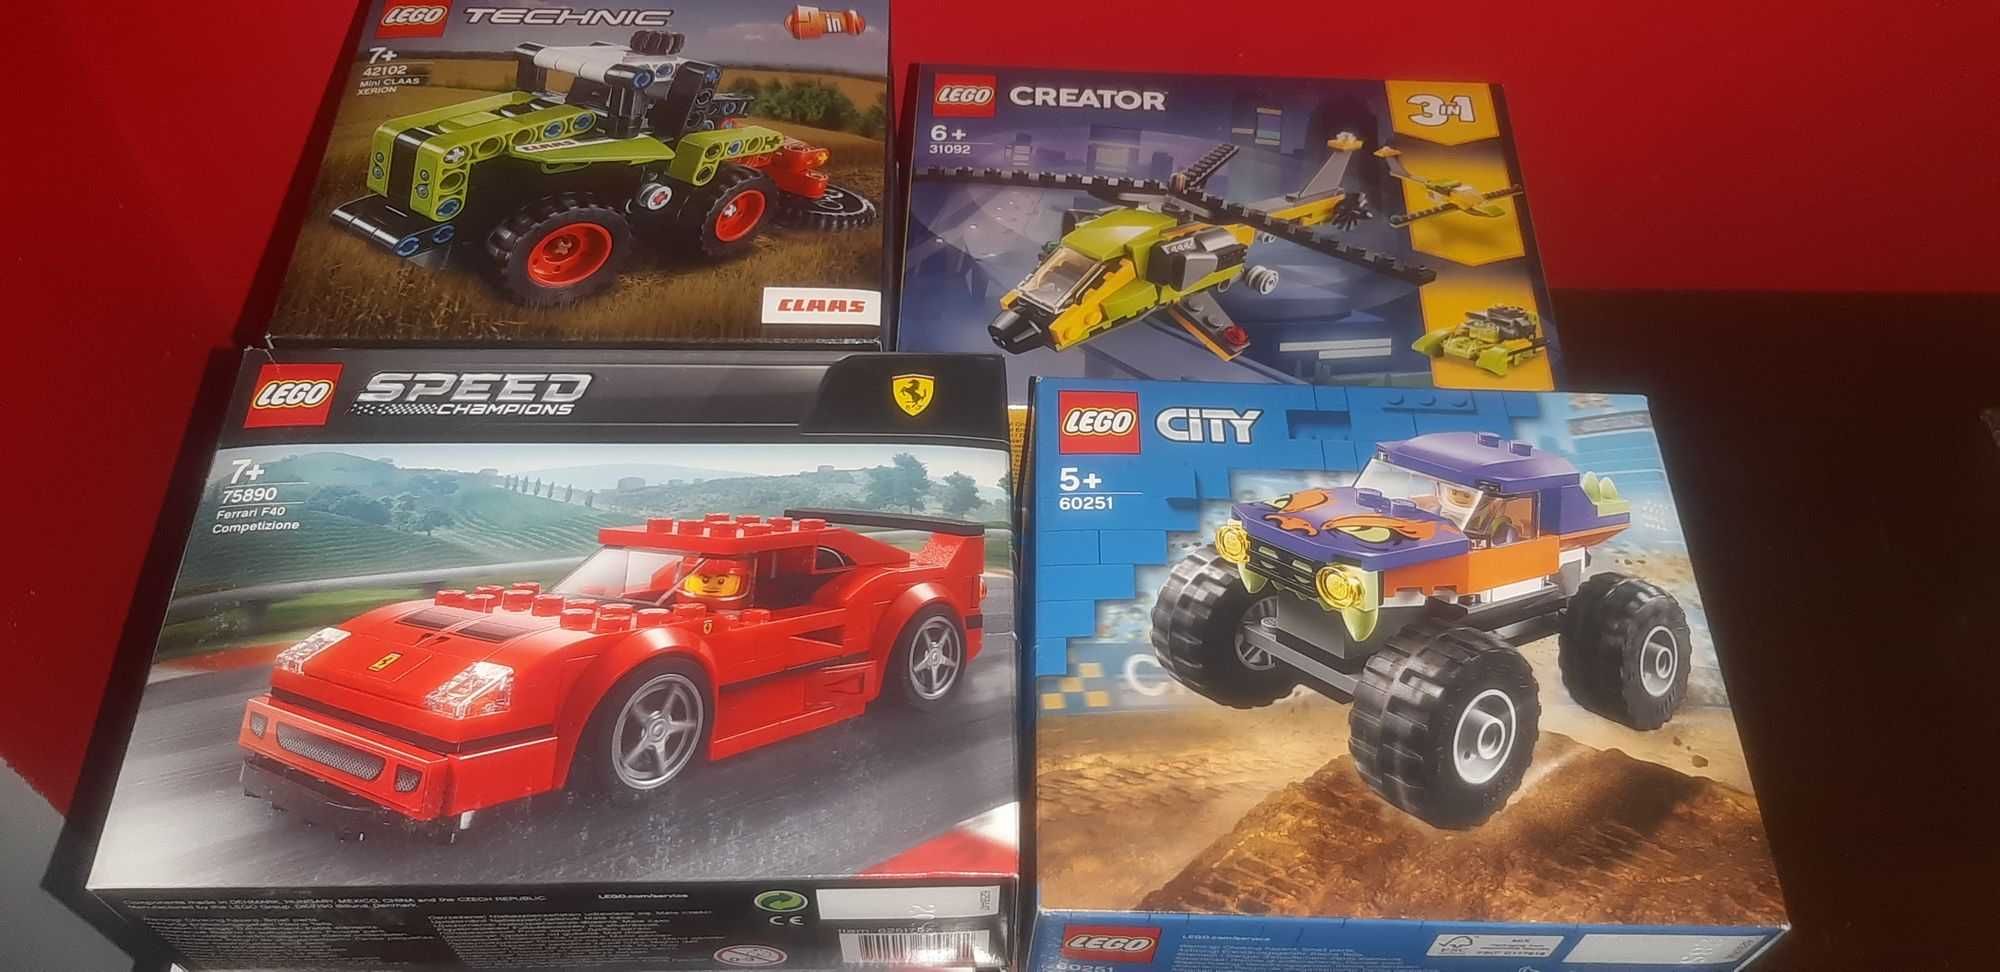 Lego / Playmobil